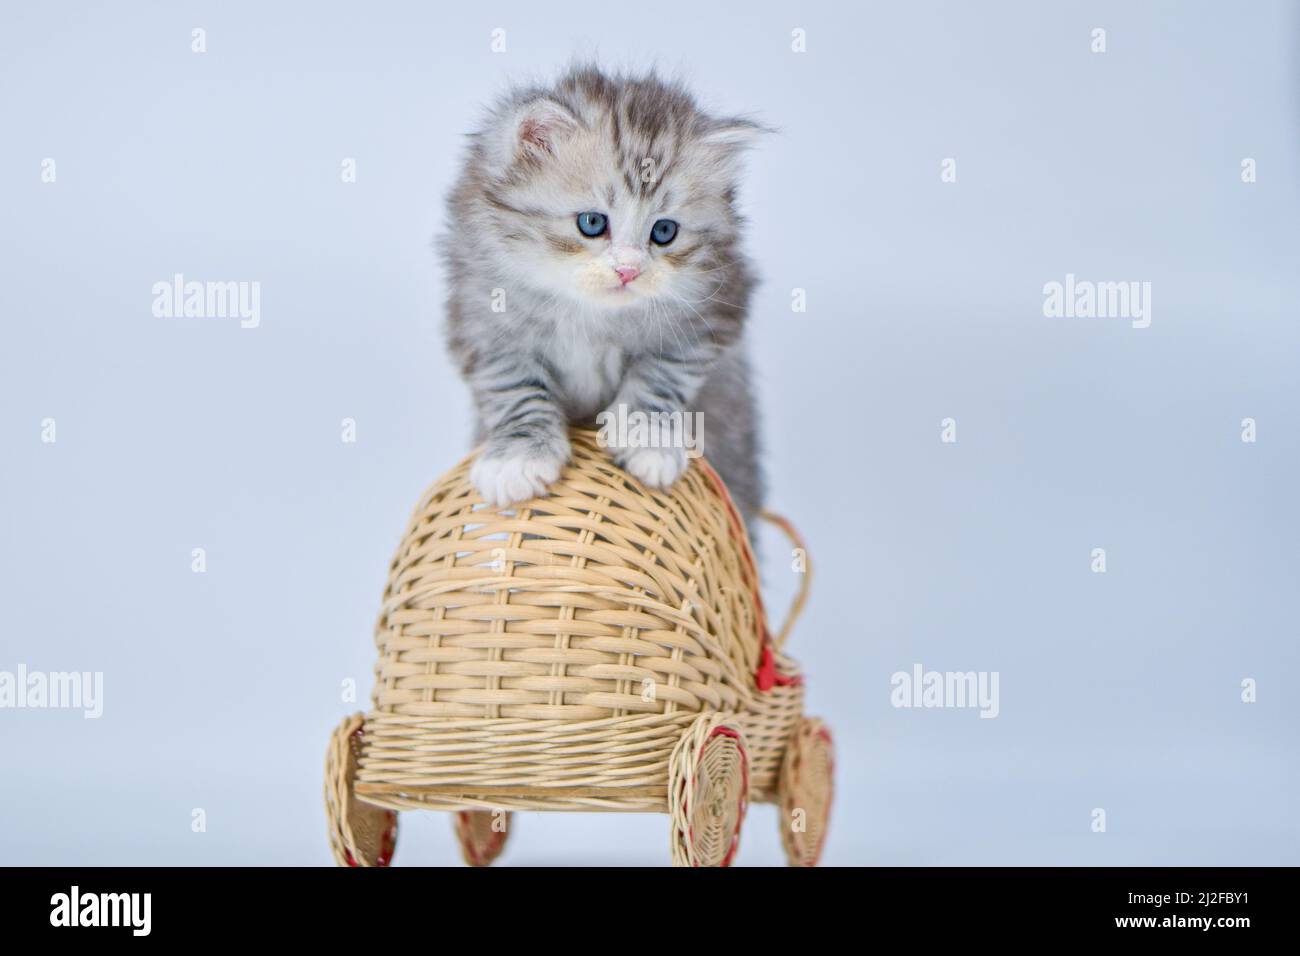 Cakyn - Siberian kitten on colored backgrounds Stock Photo